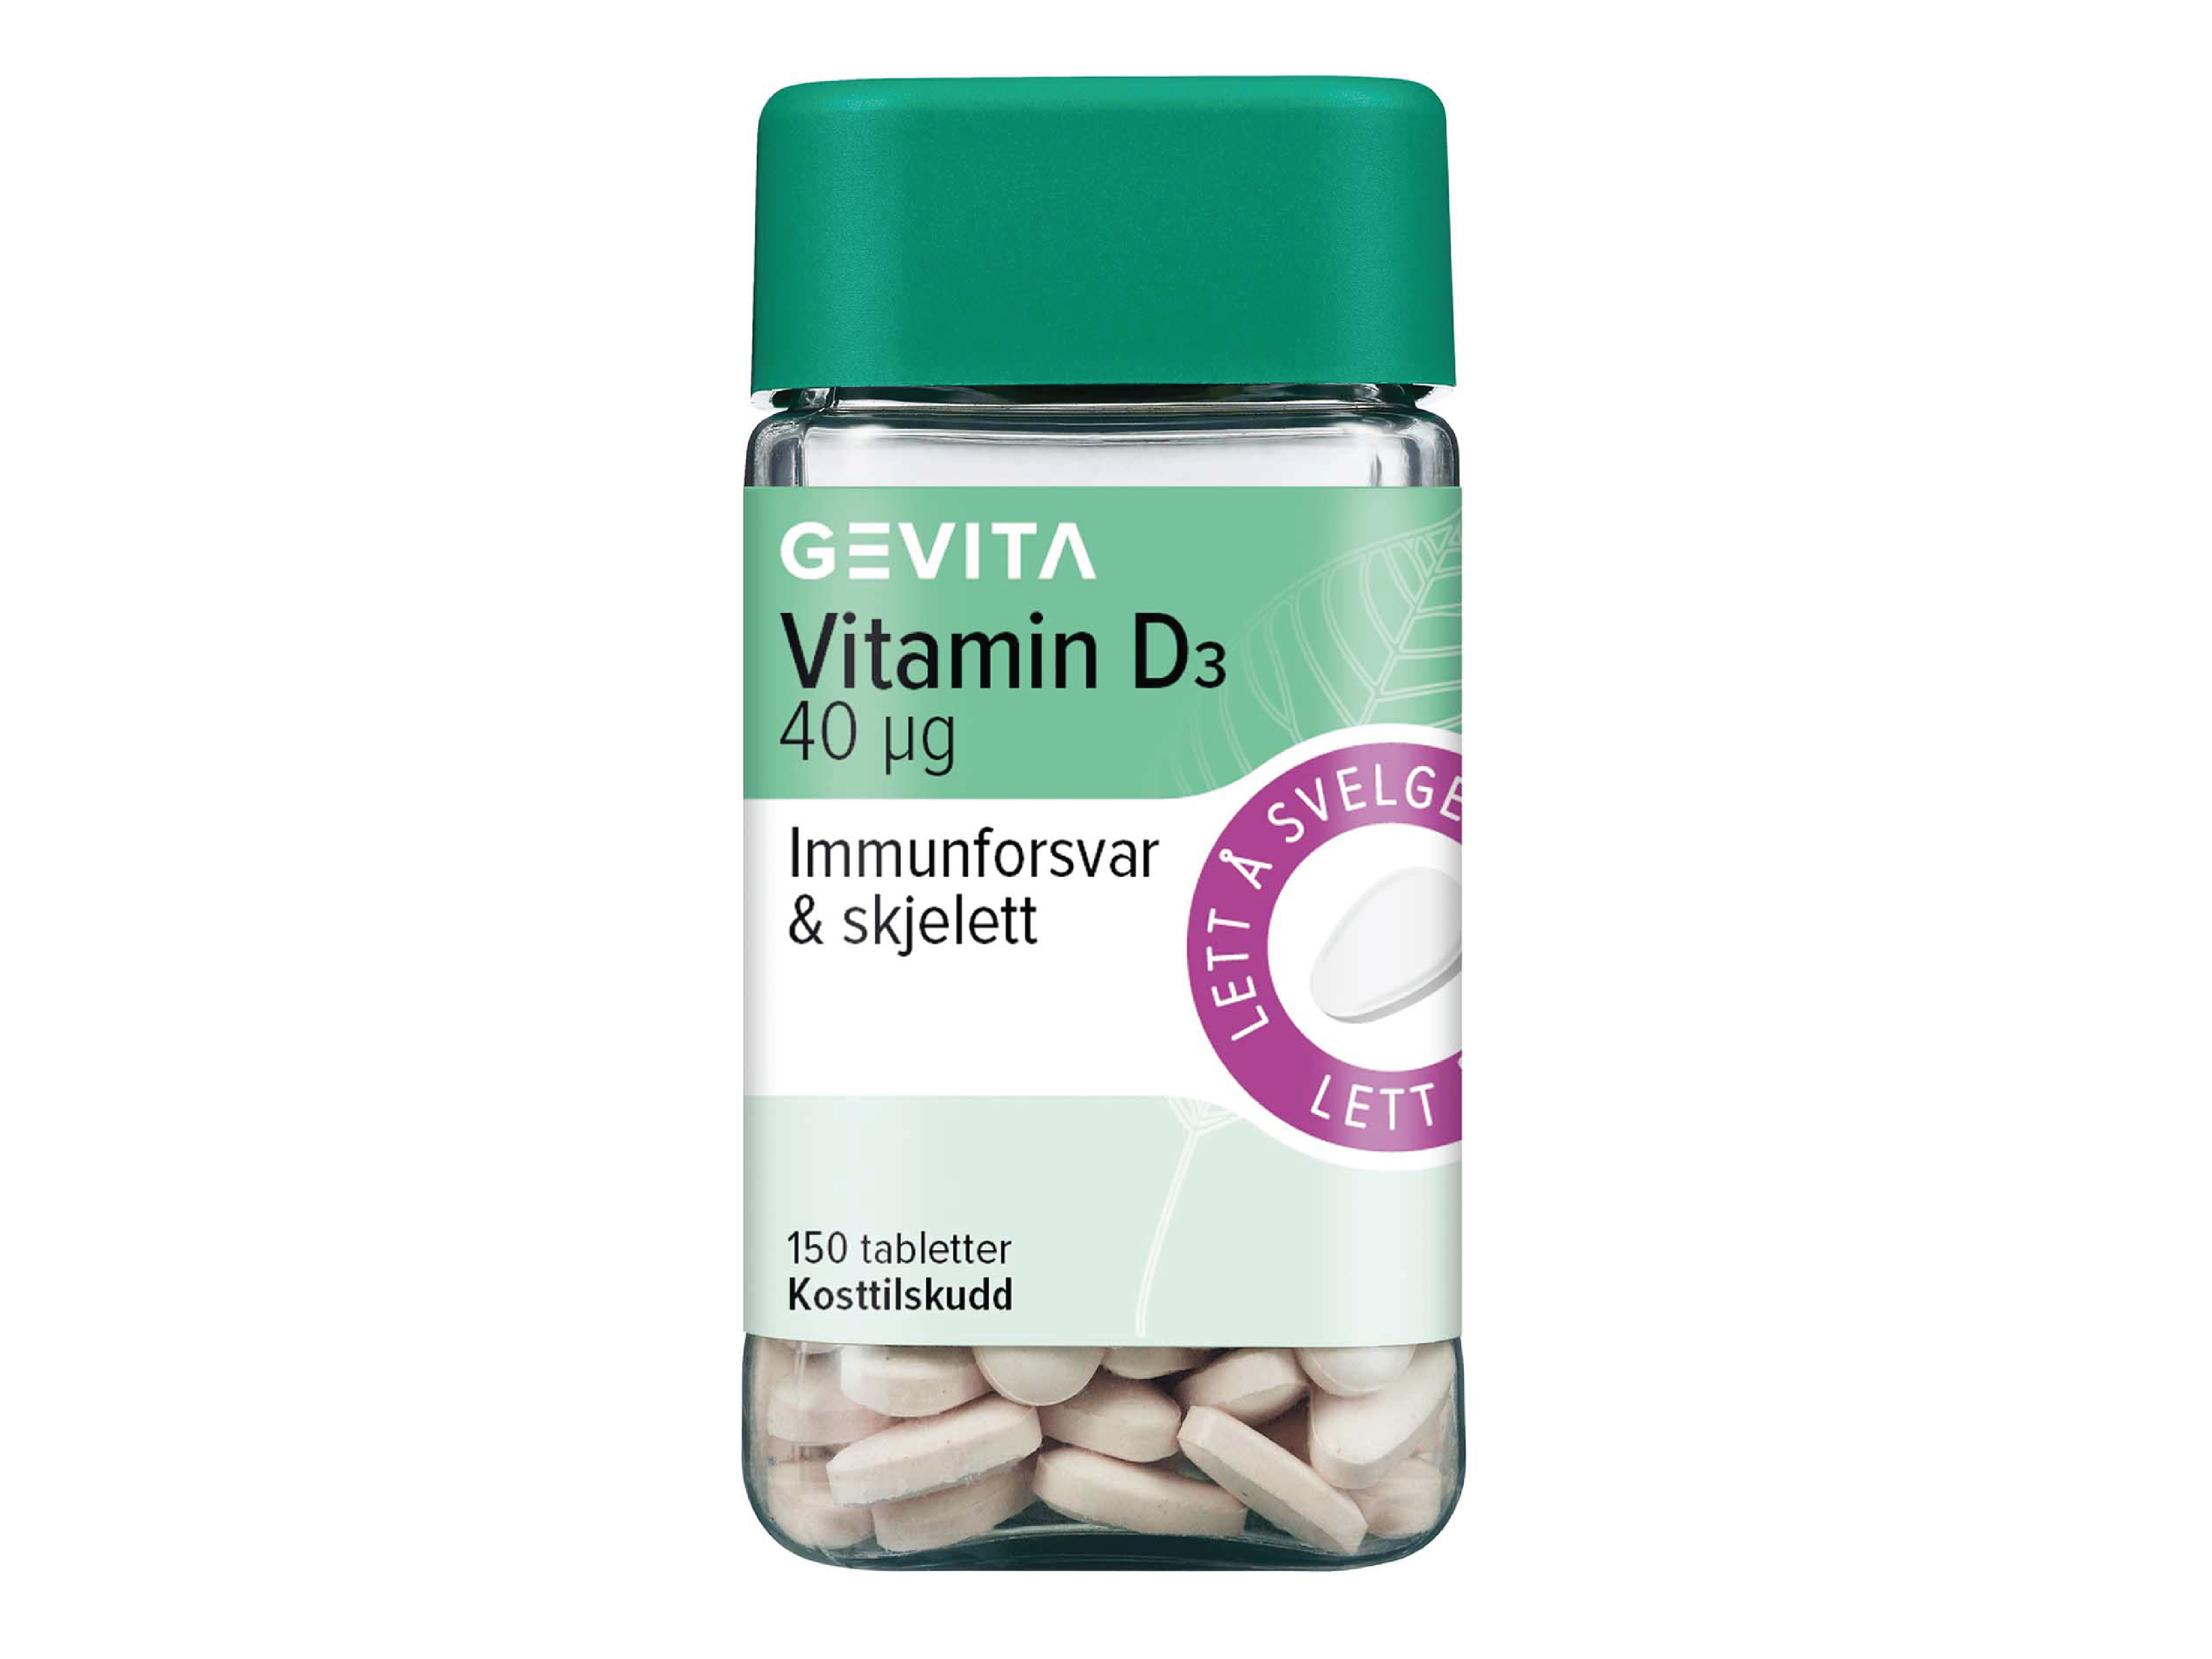 Gevita Vitamin D3 40 µg, 150 tabletter